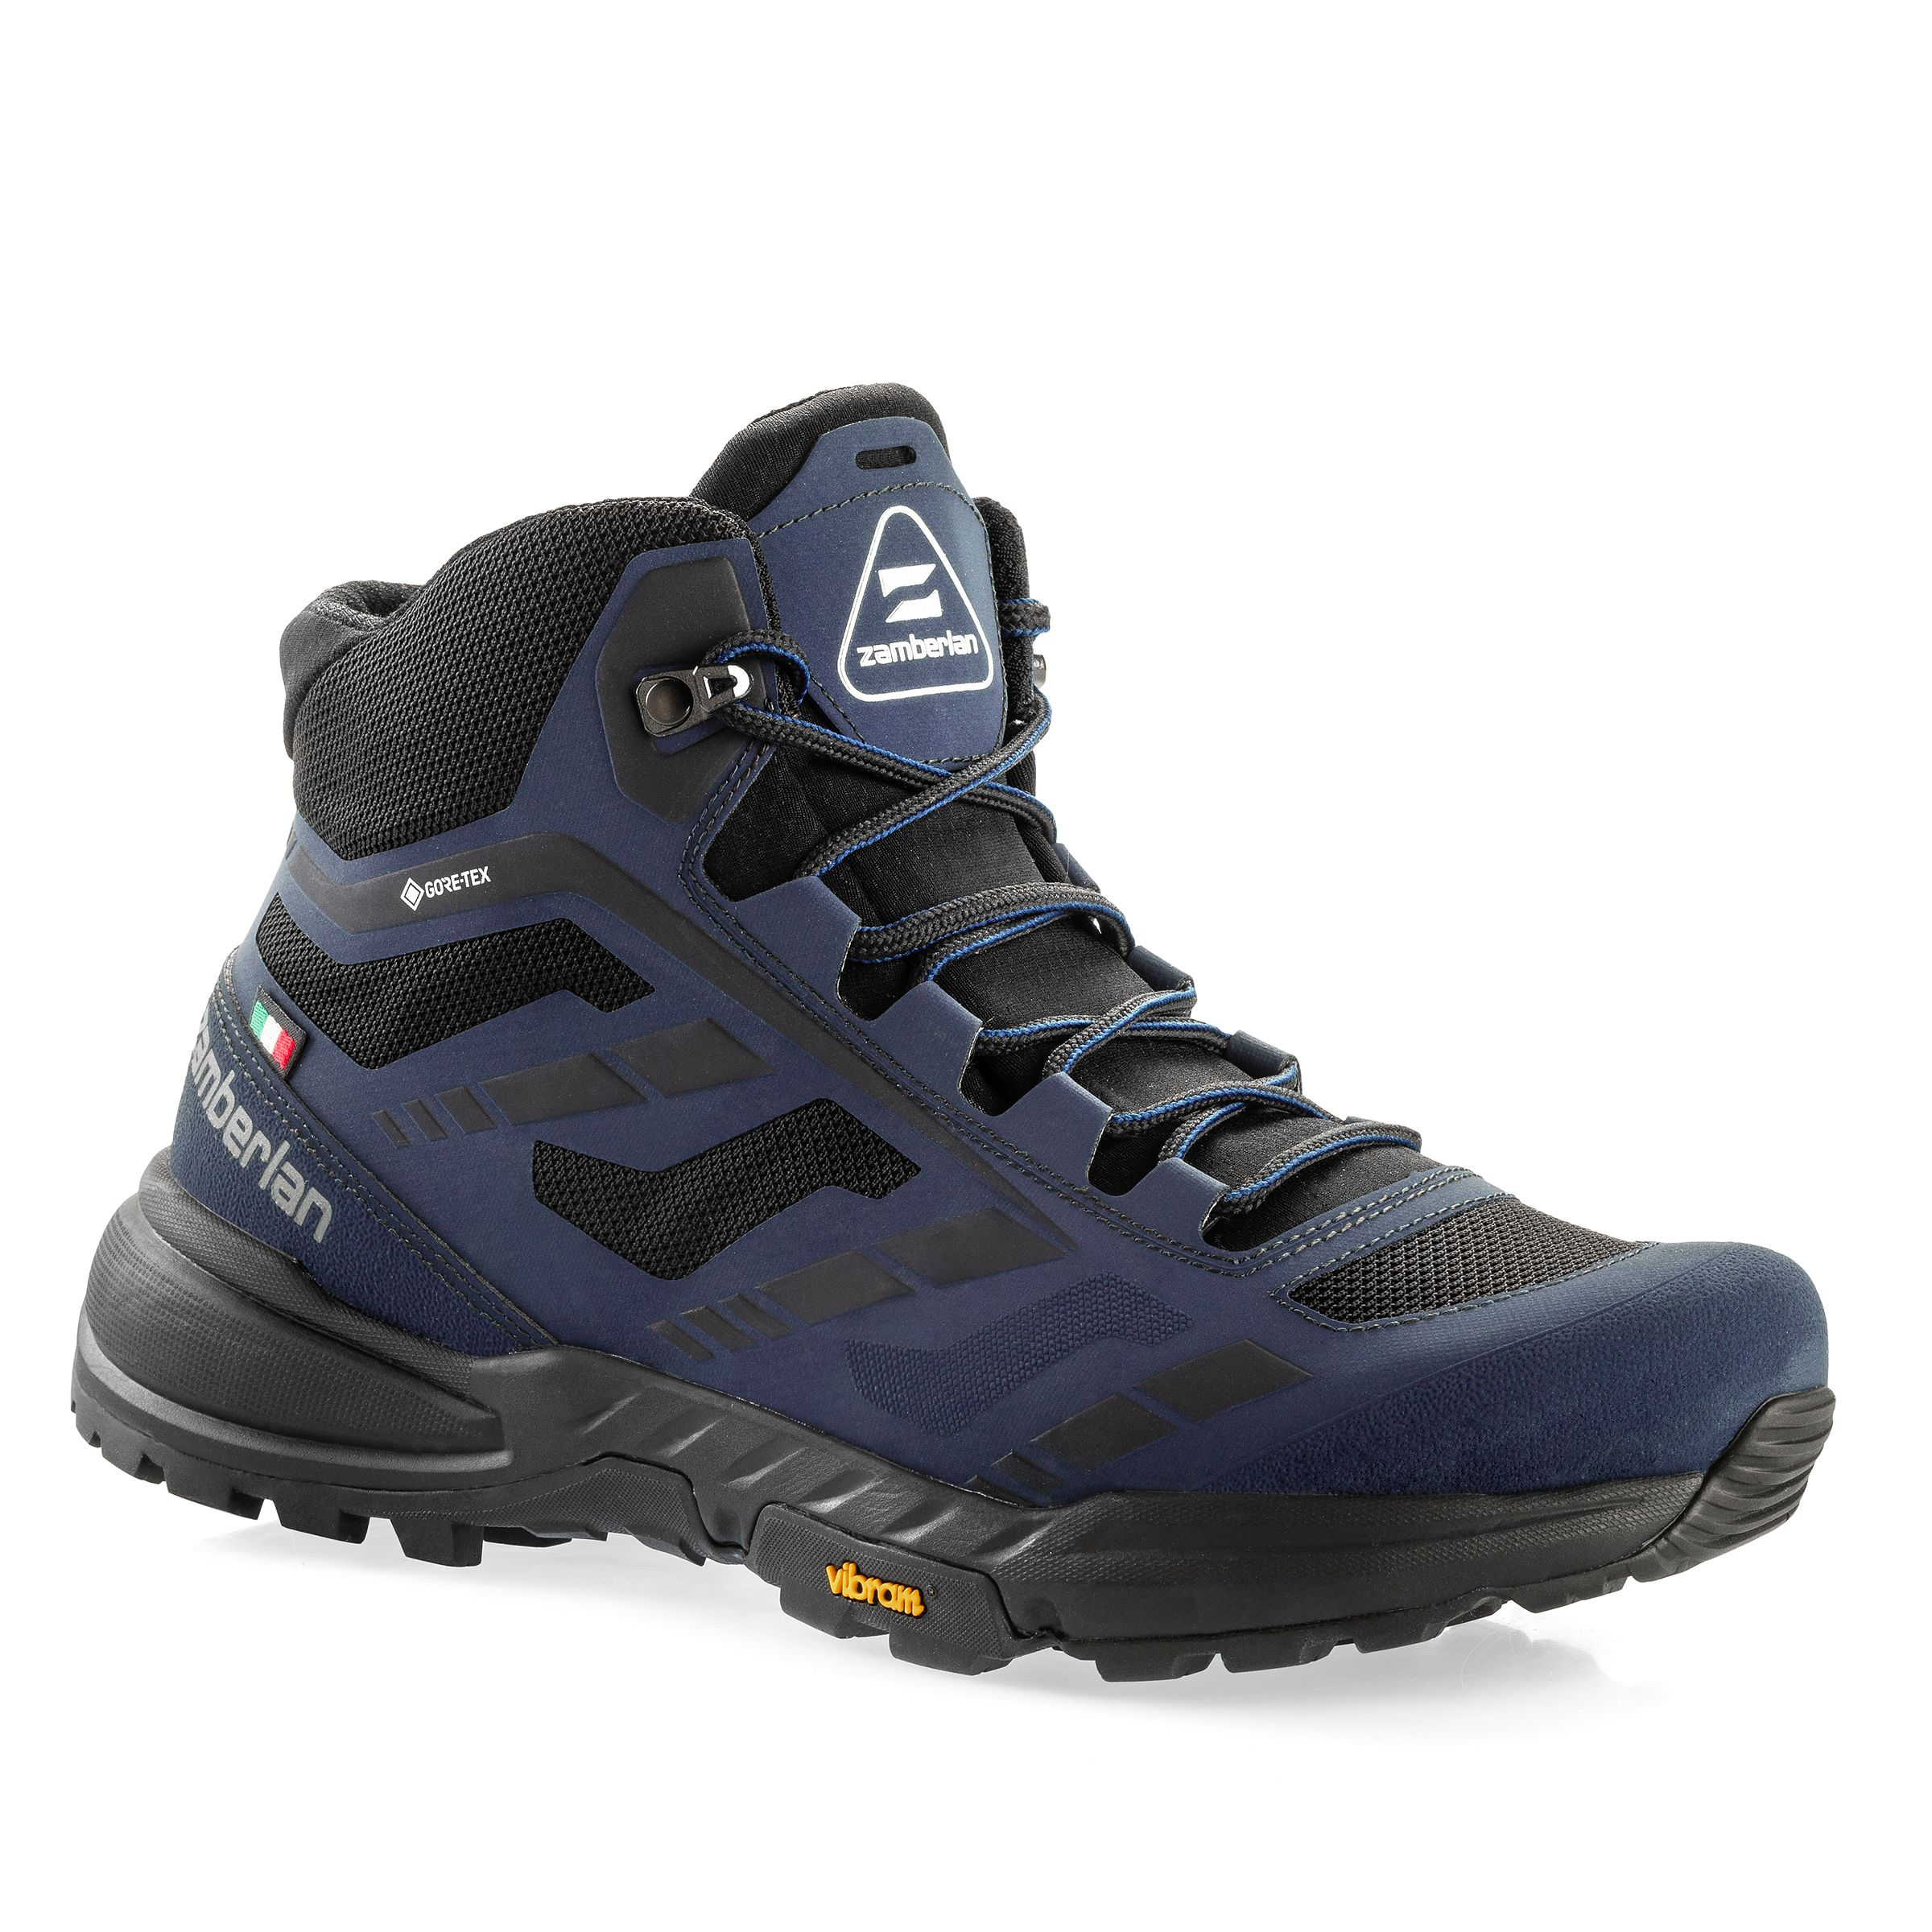 Zamberlan 219 Anabasis GTX Waterproof Mid Hiking Boots for Men - Blue - 8M